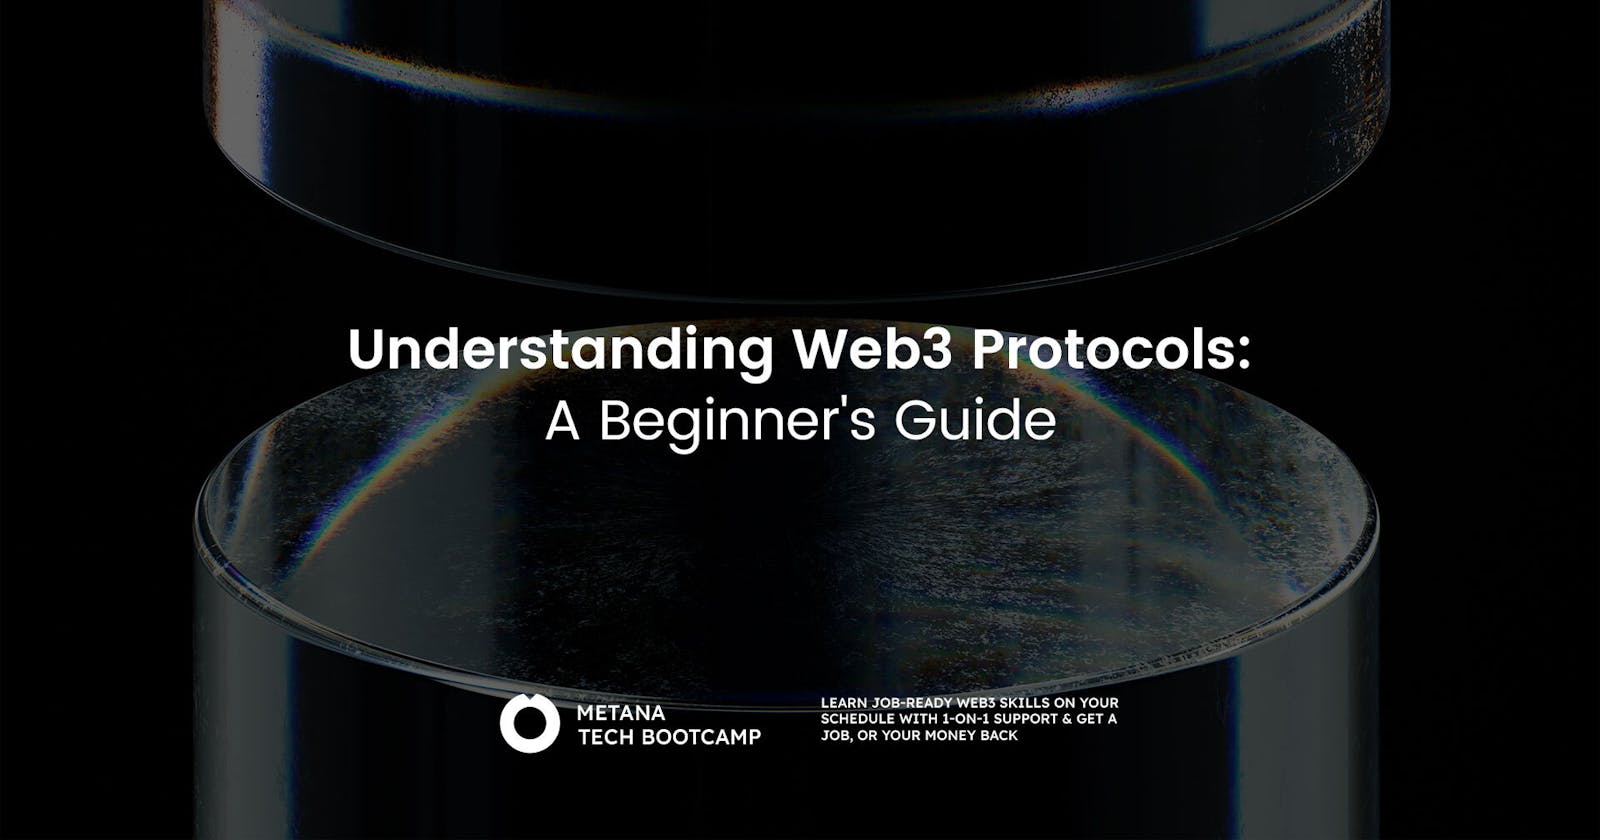 Web3 Protocols: A Beginner’s Guide